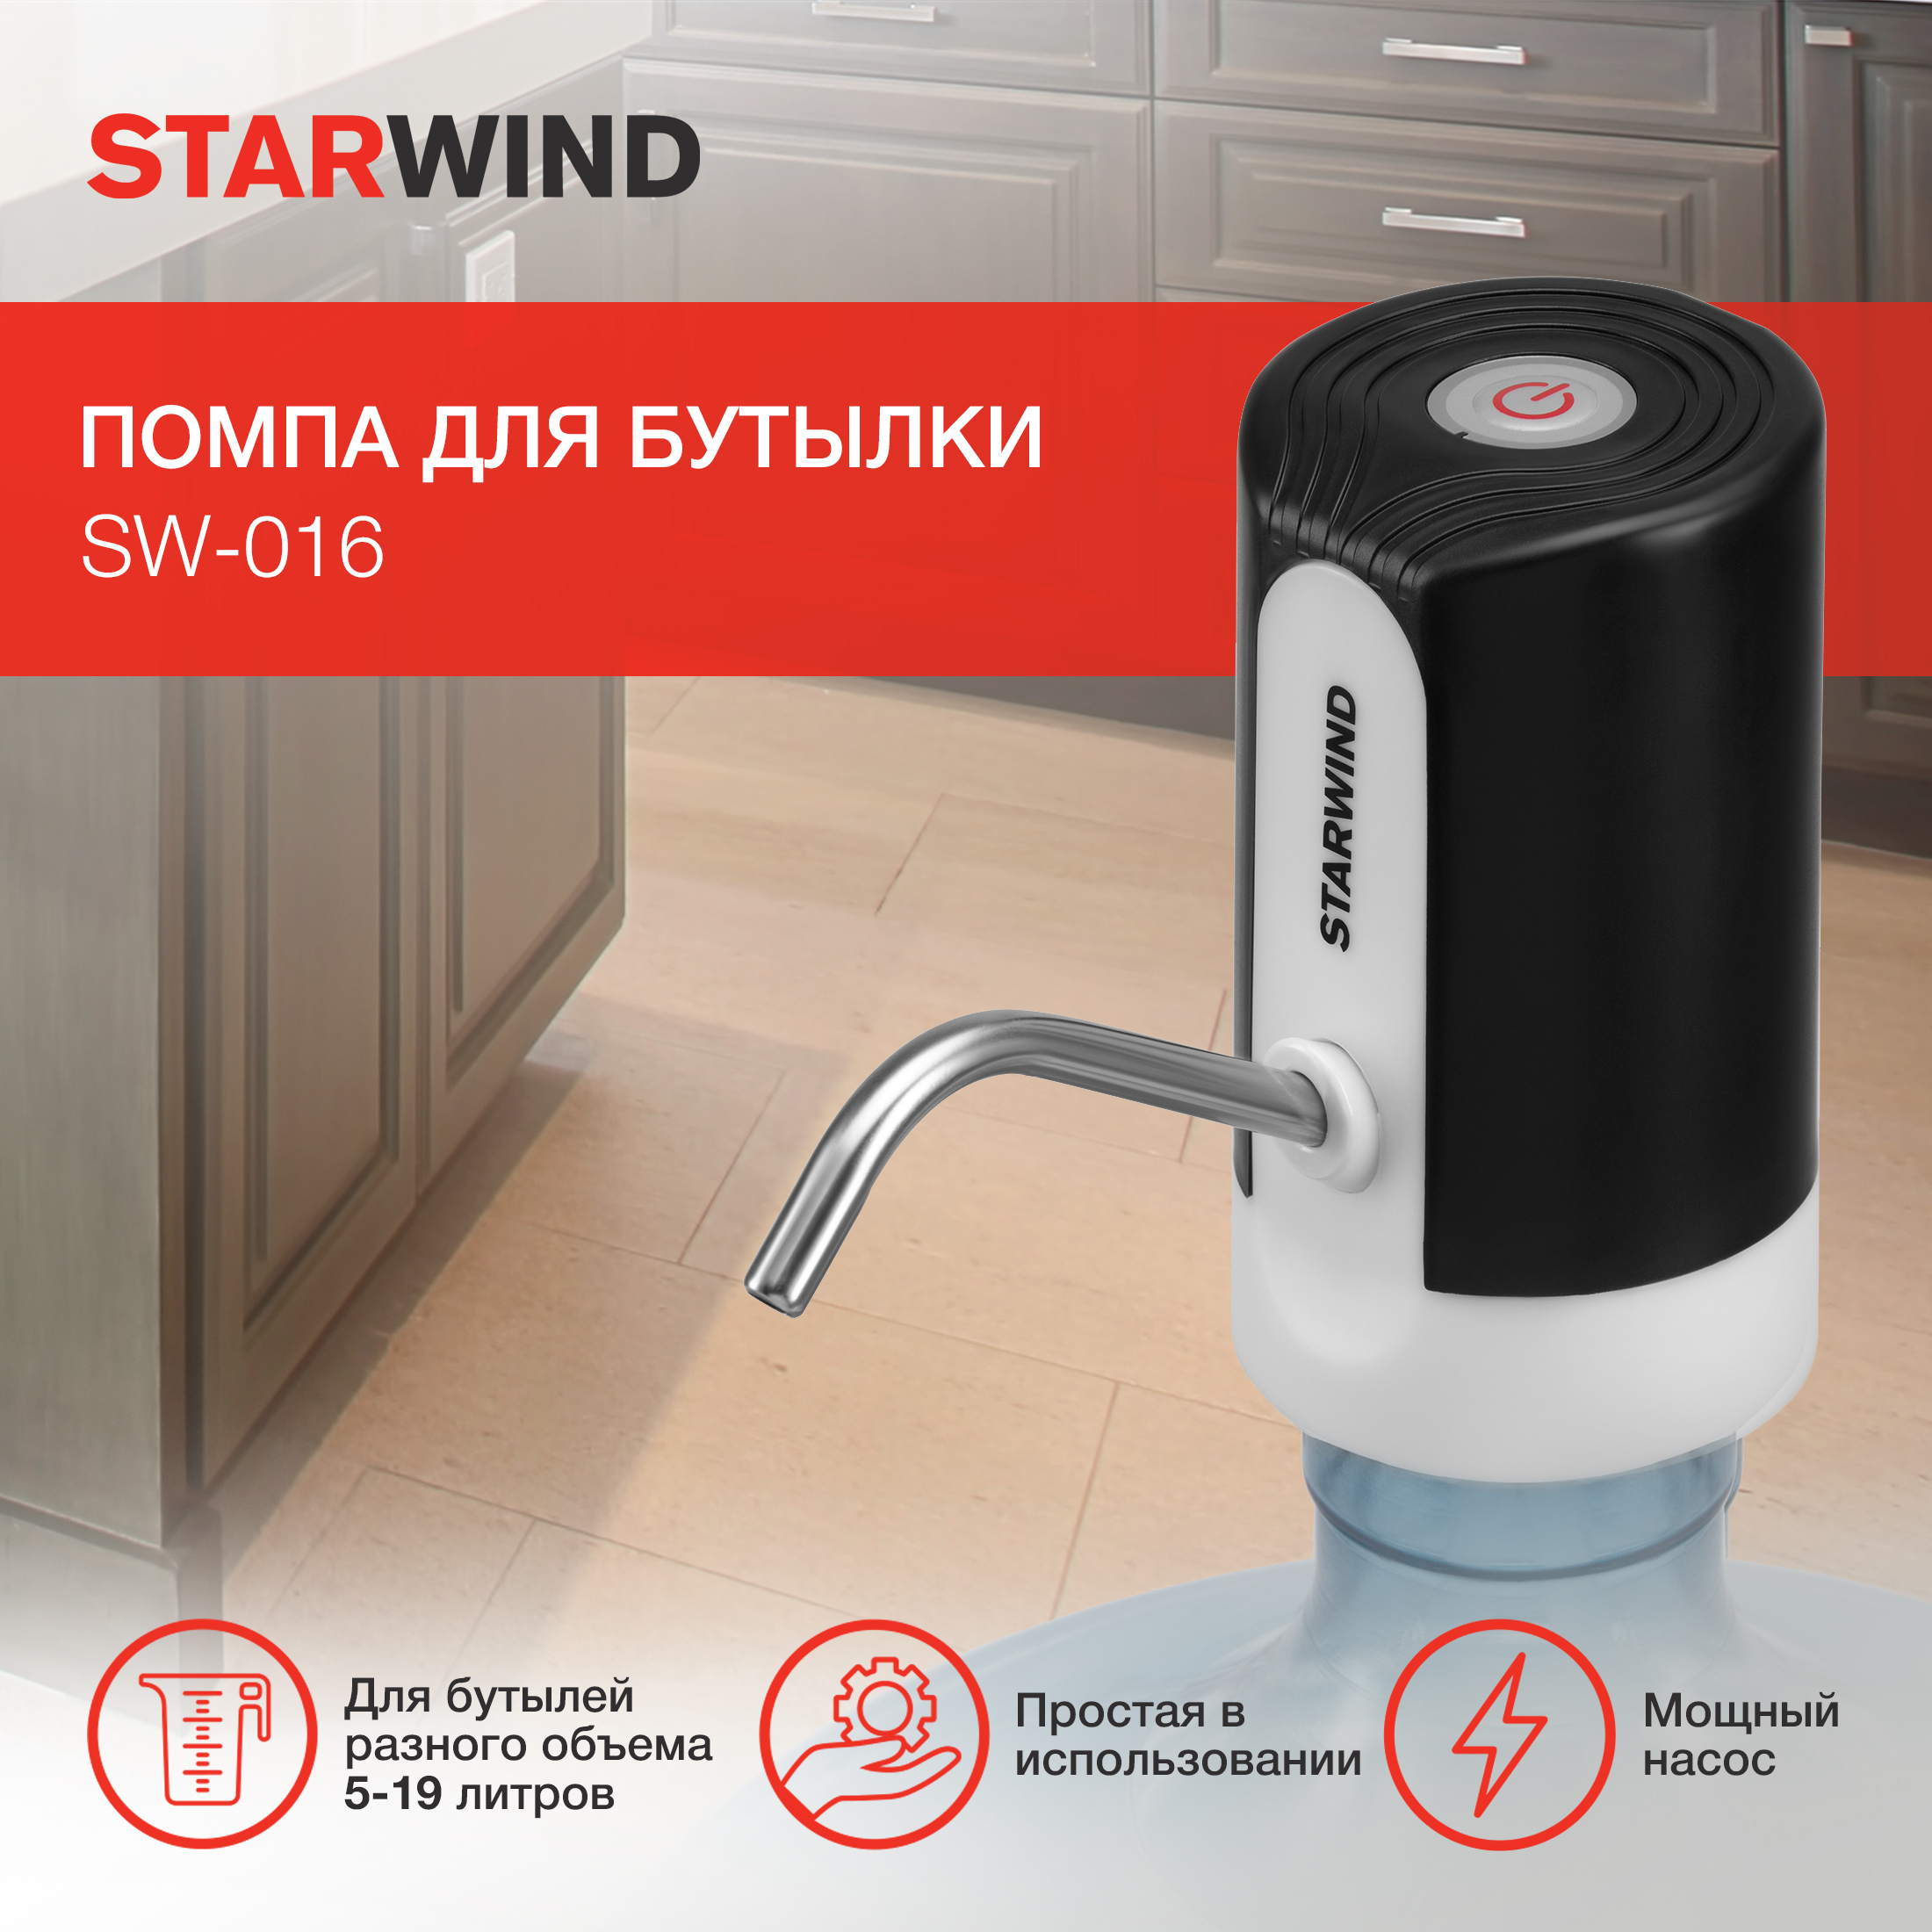 Помпа для воды STARWIND SW-016, белый/черный